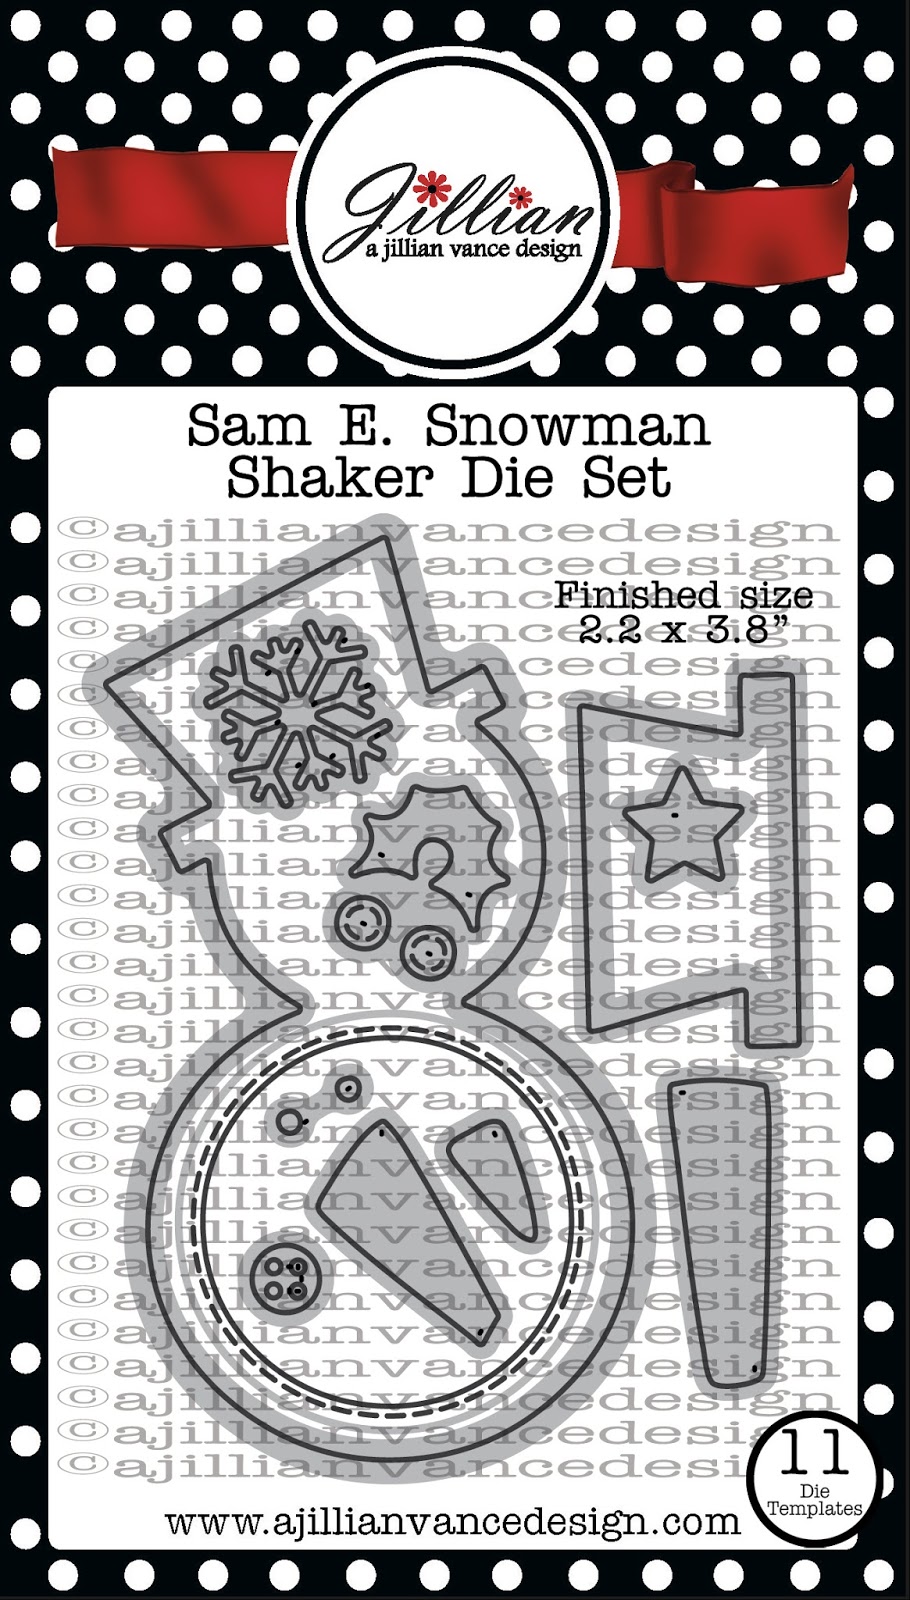 http://stores.ajillianvancedesign.com/sam-e-snowman-shaker-die-set/